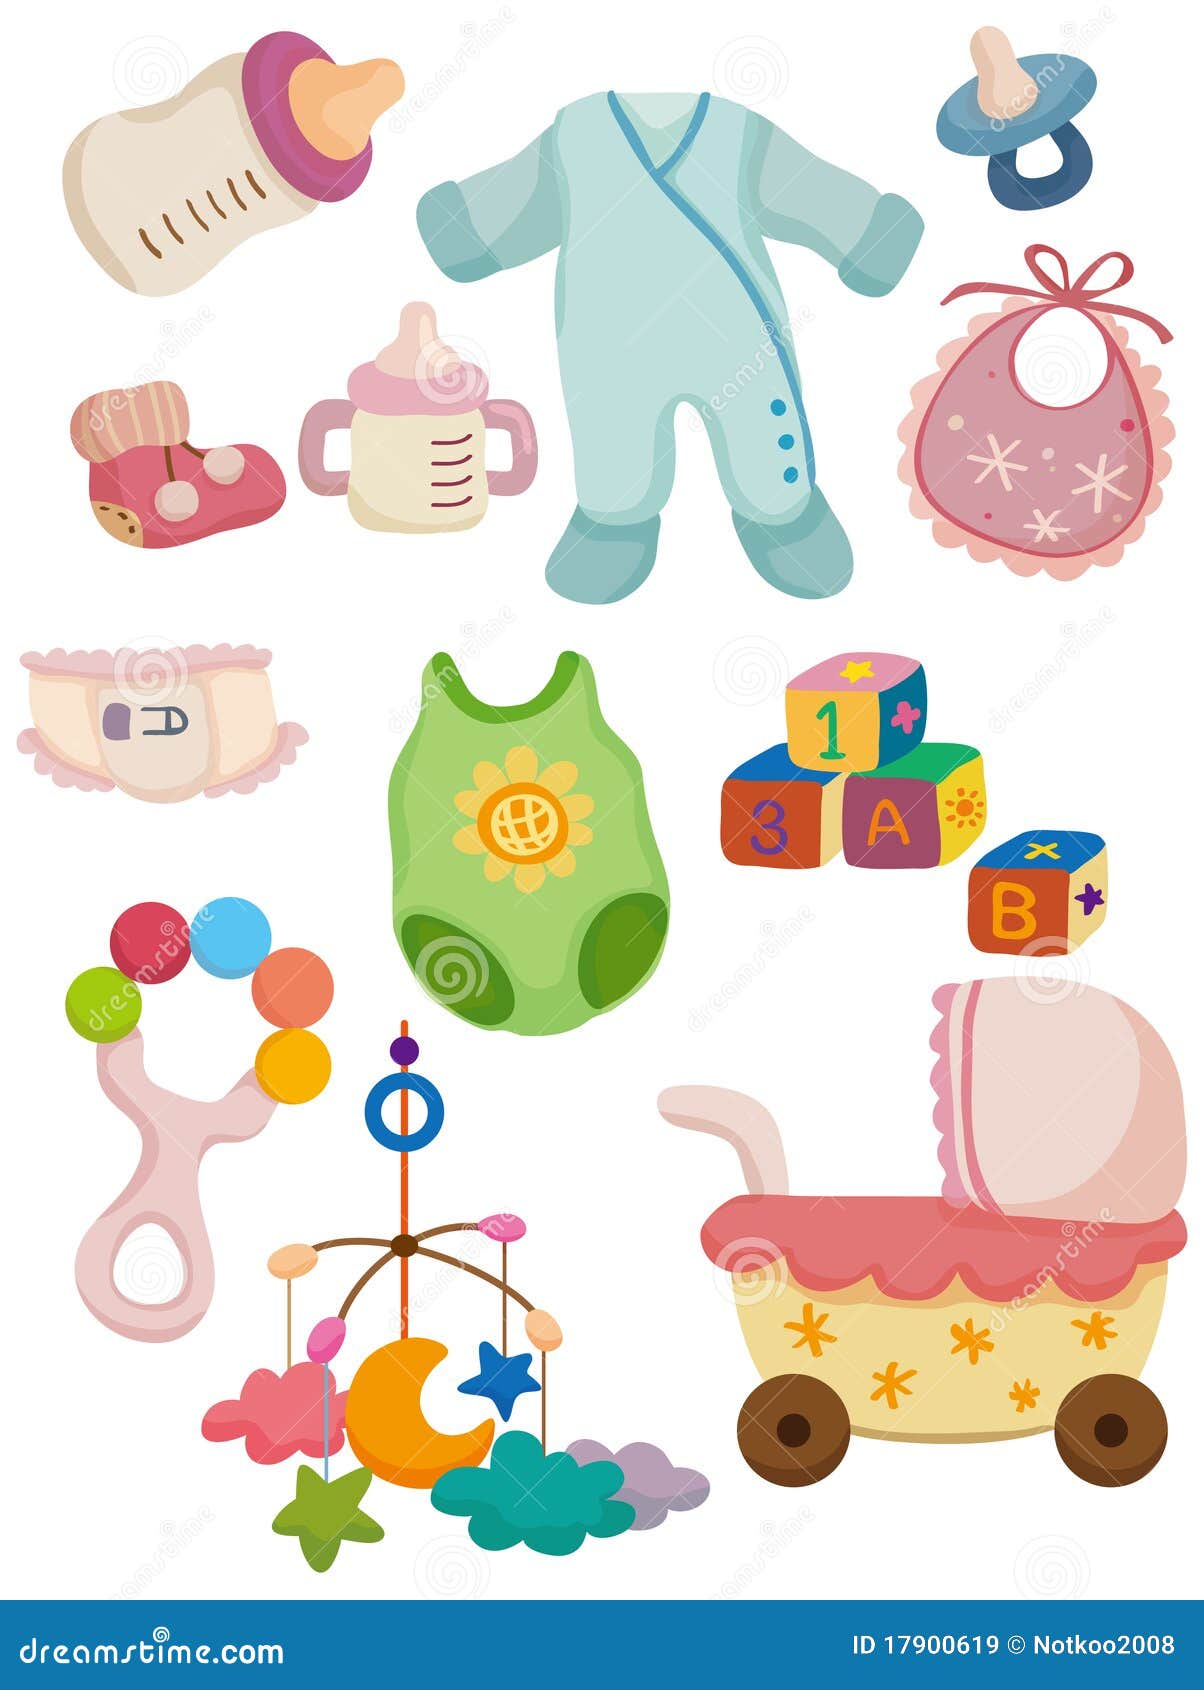 Cartoon Baby Stuff Icon Royalty Free Stock Images - Image: 17900619